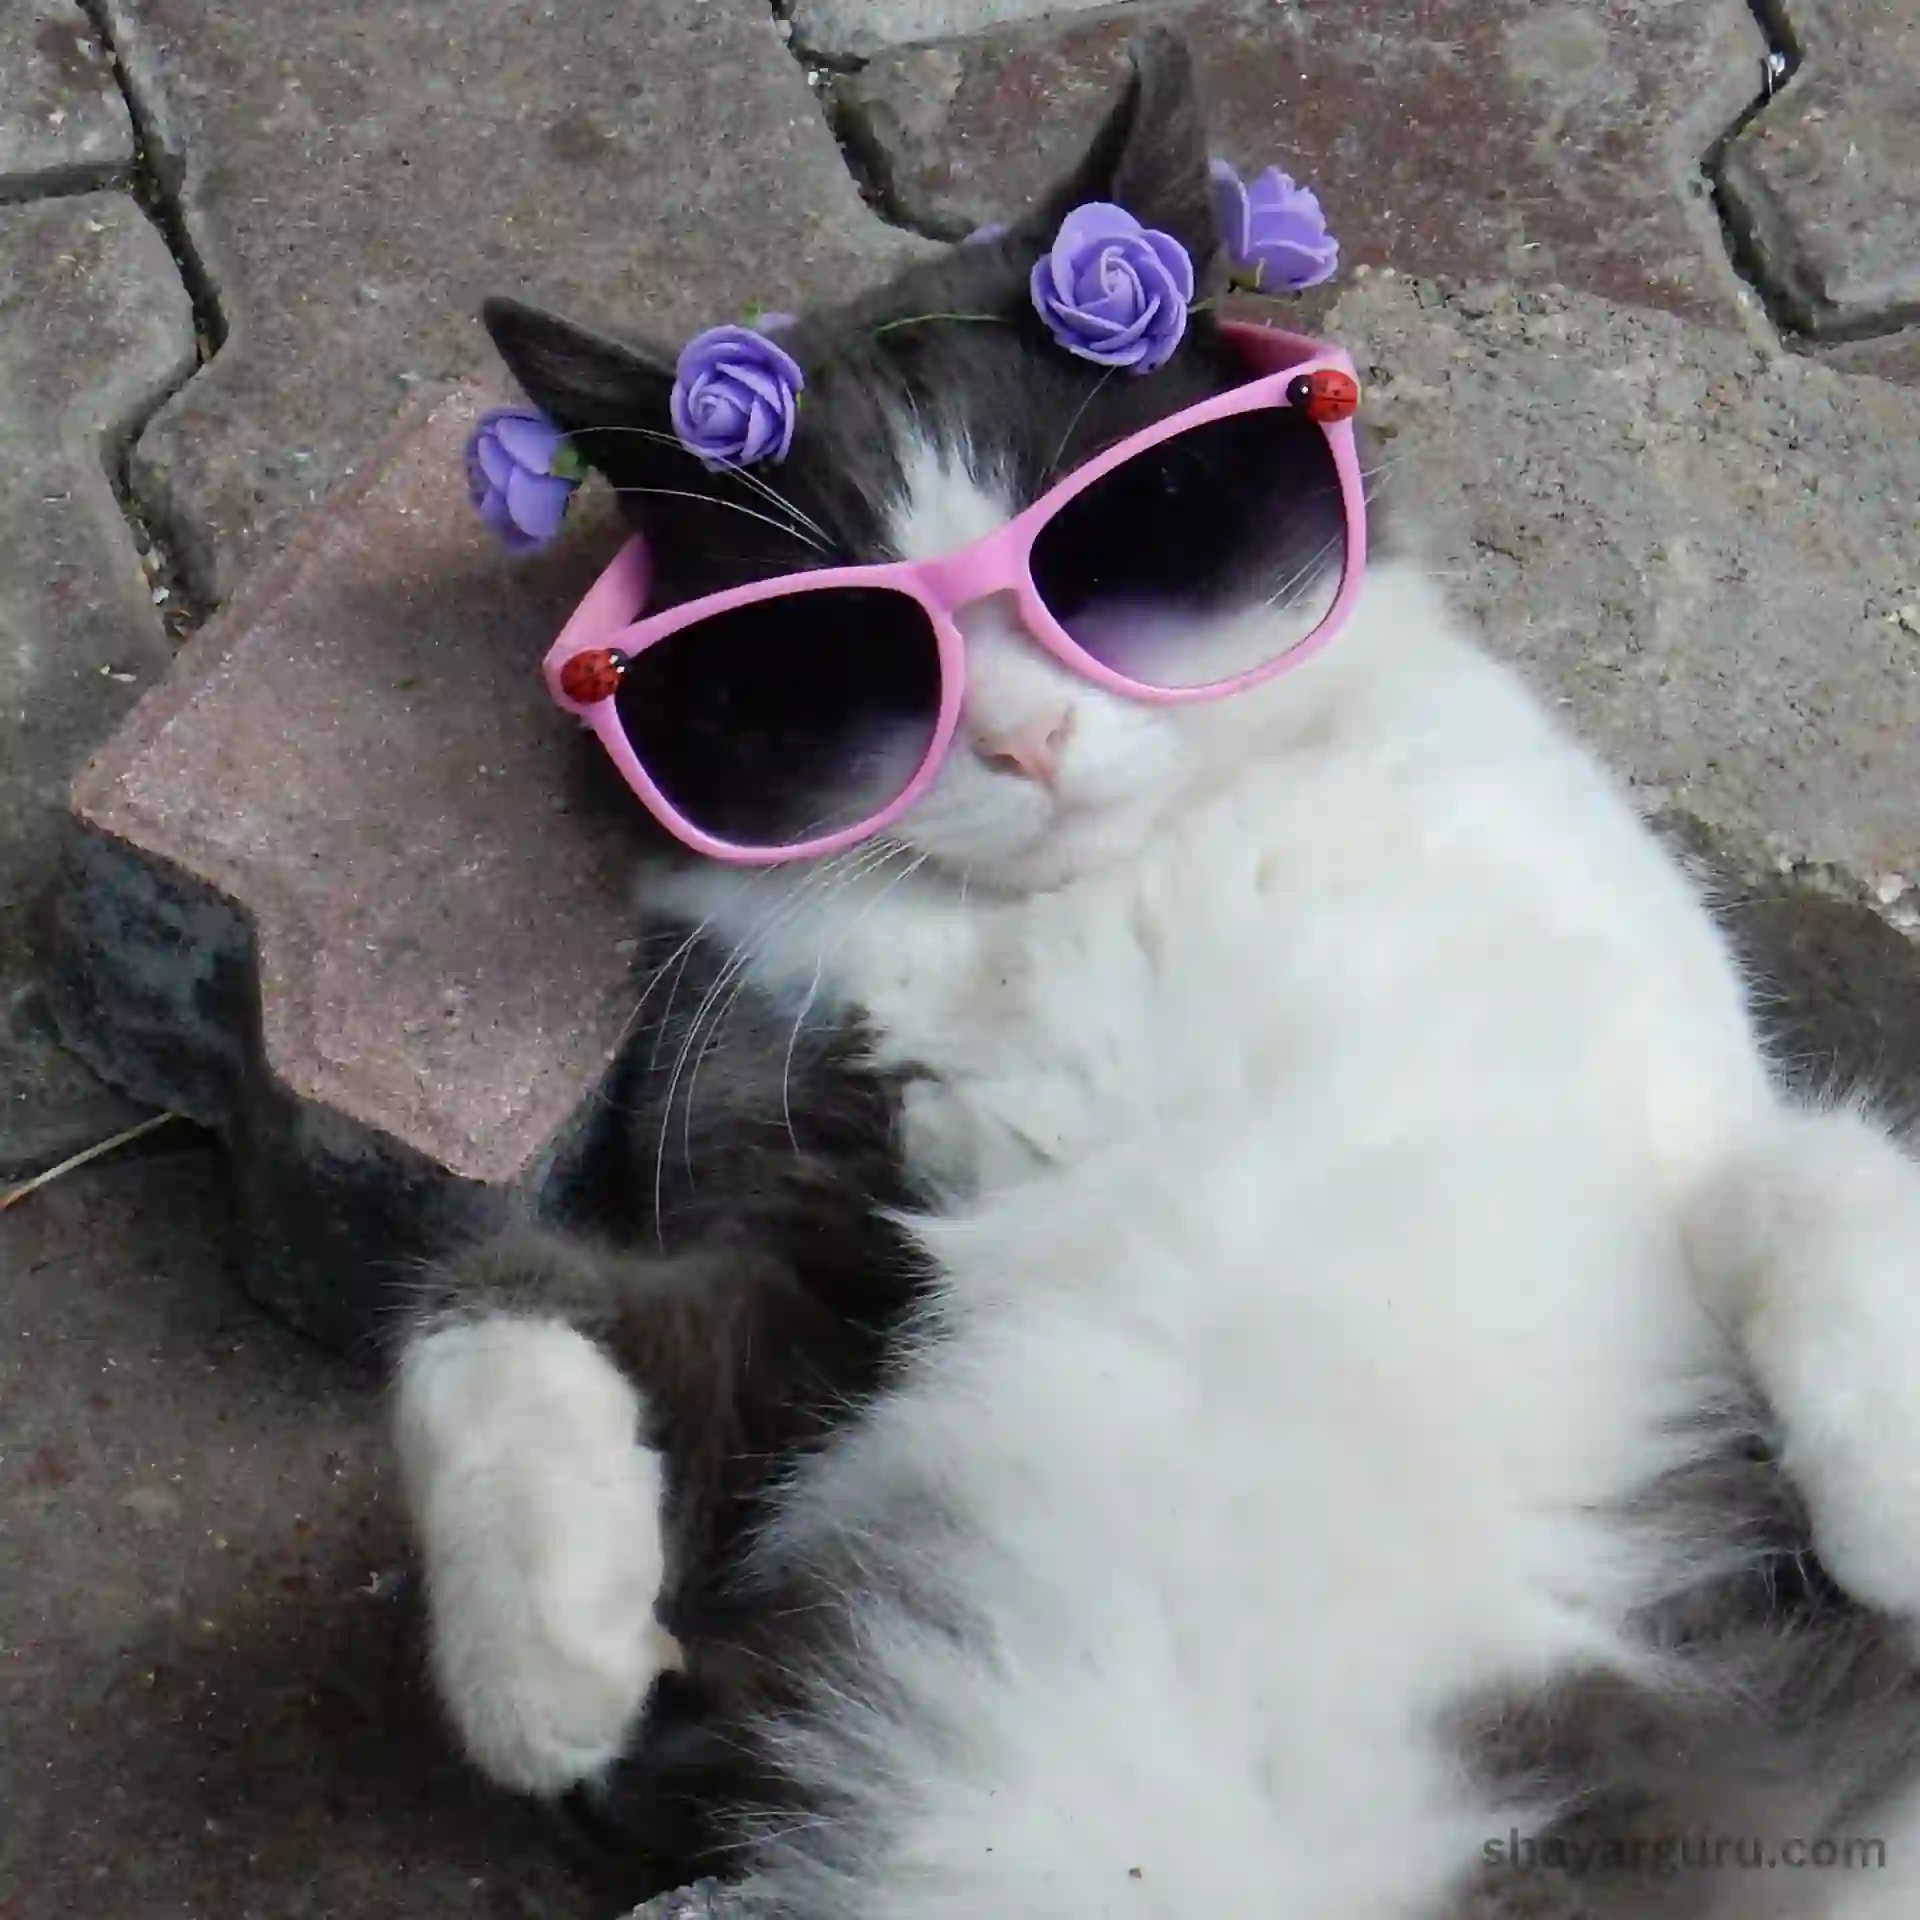 sunglasses cat dp for whatsapp